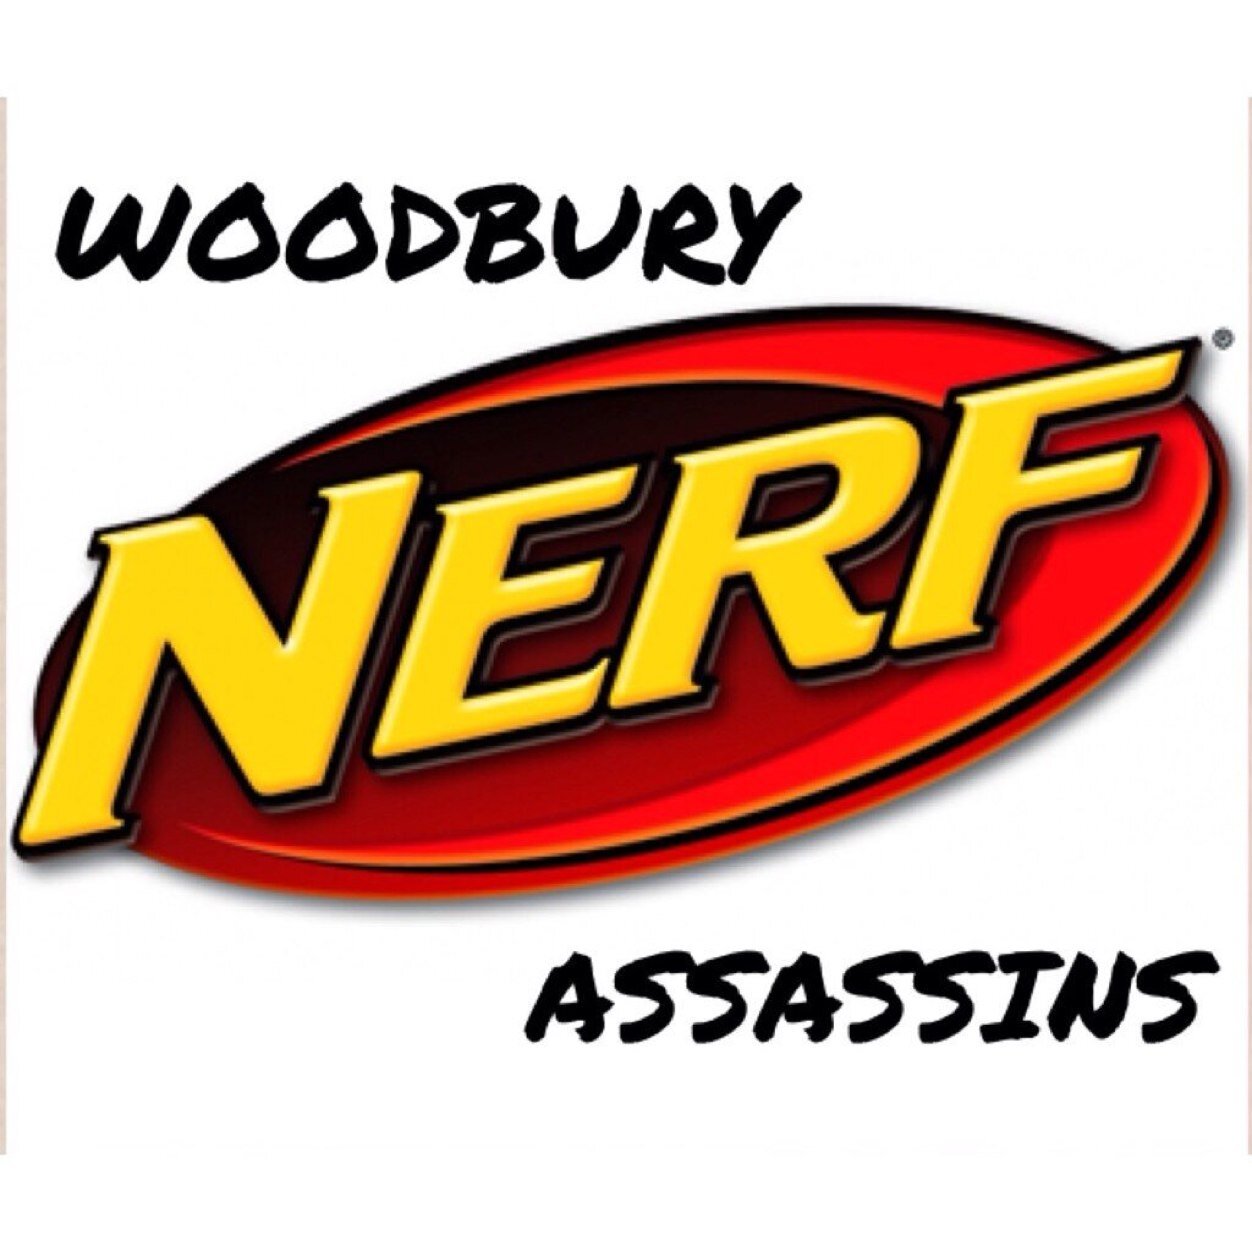 Woodbury Nerf